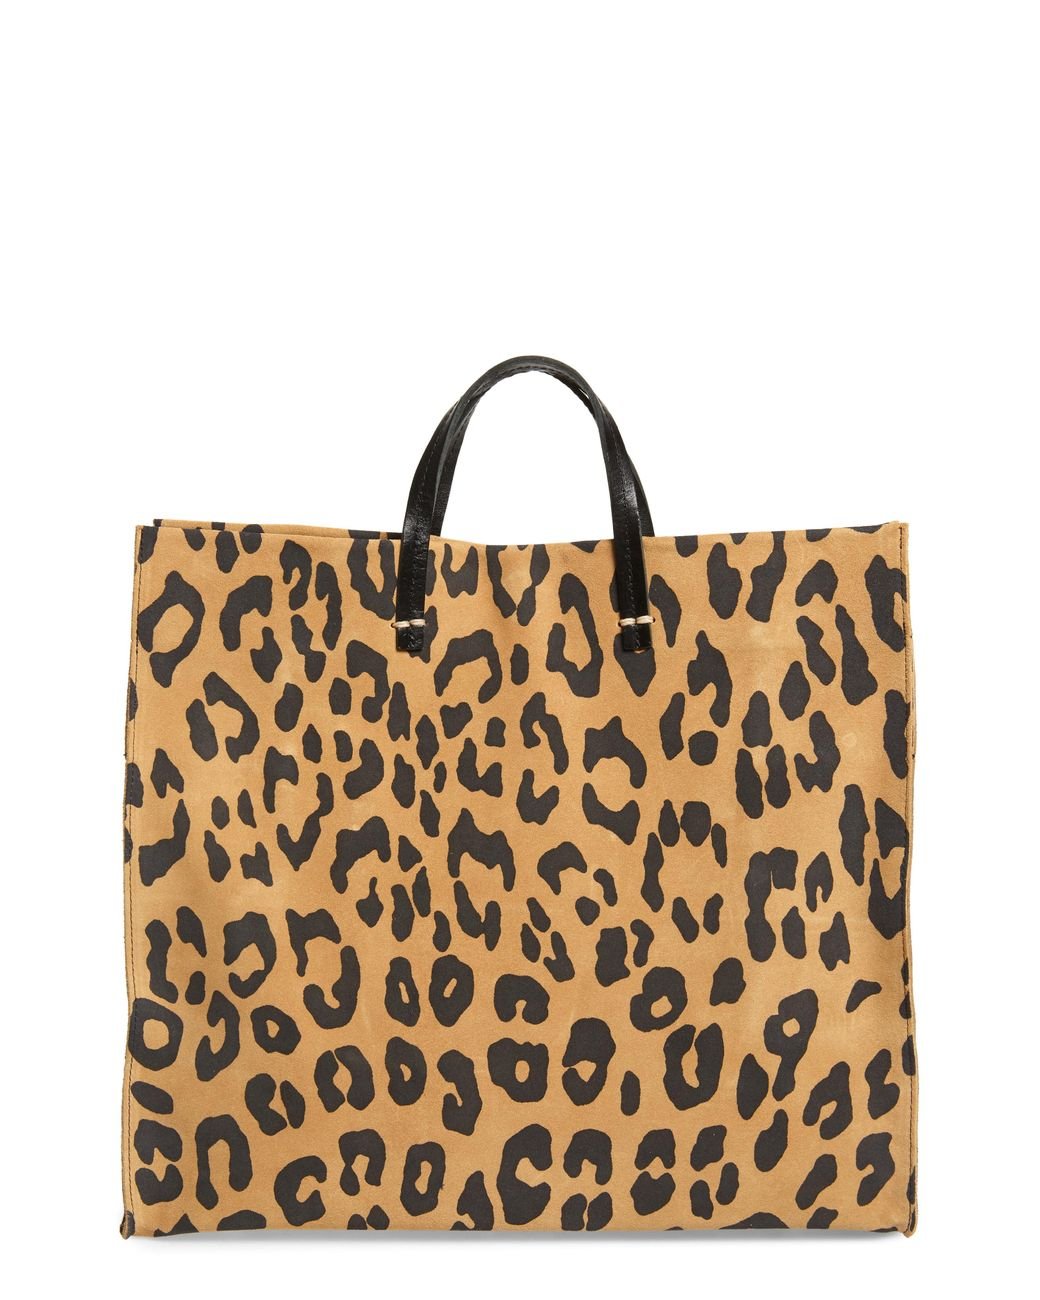 Clare V Large Simple Tote Black Leather Leopard Calf Hair Shoulder Bag- NWT